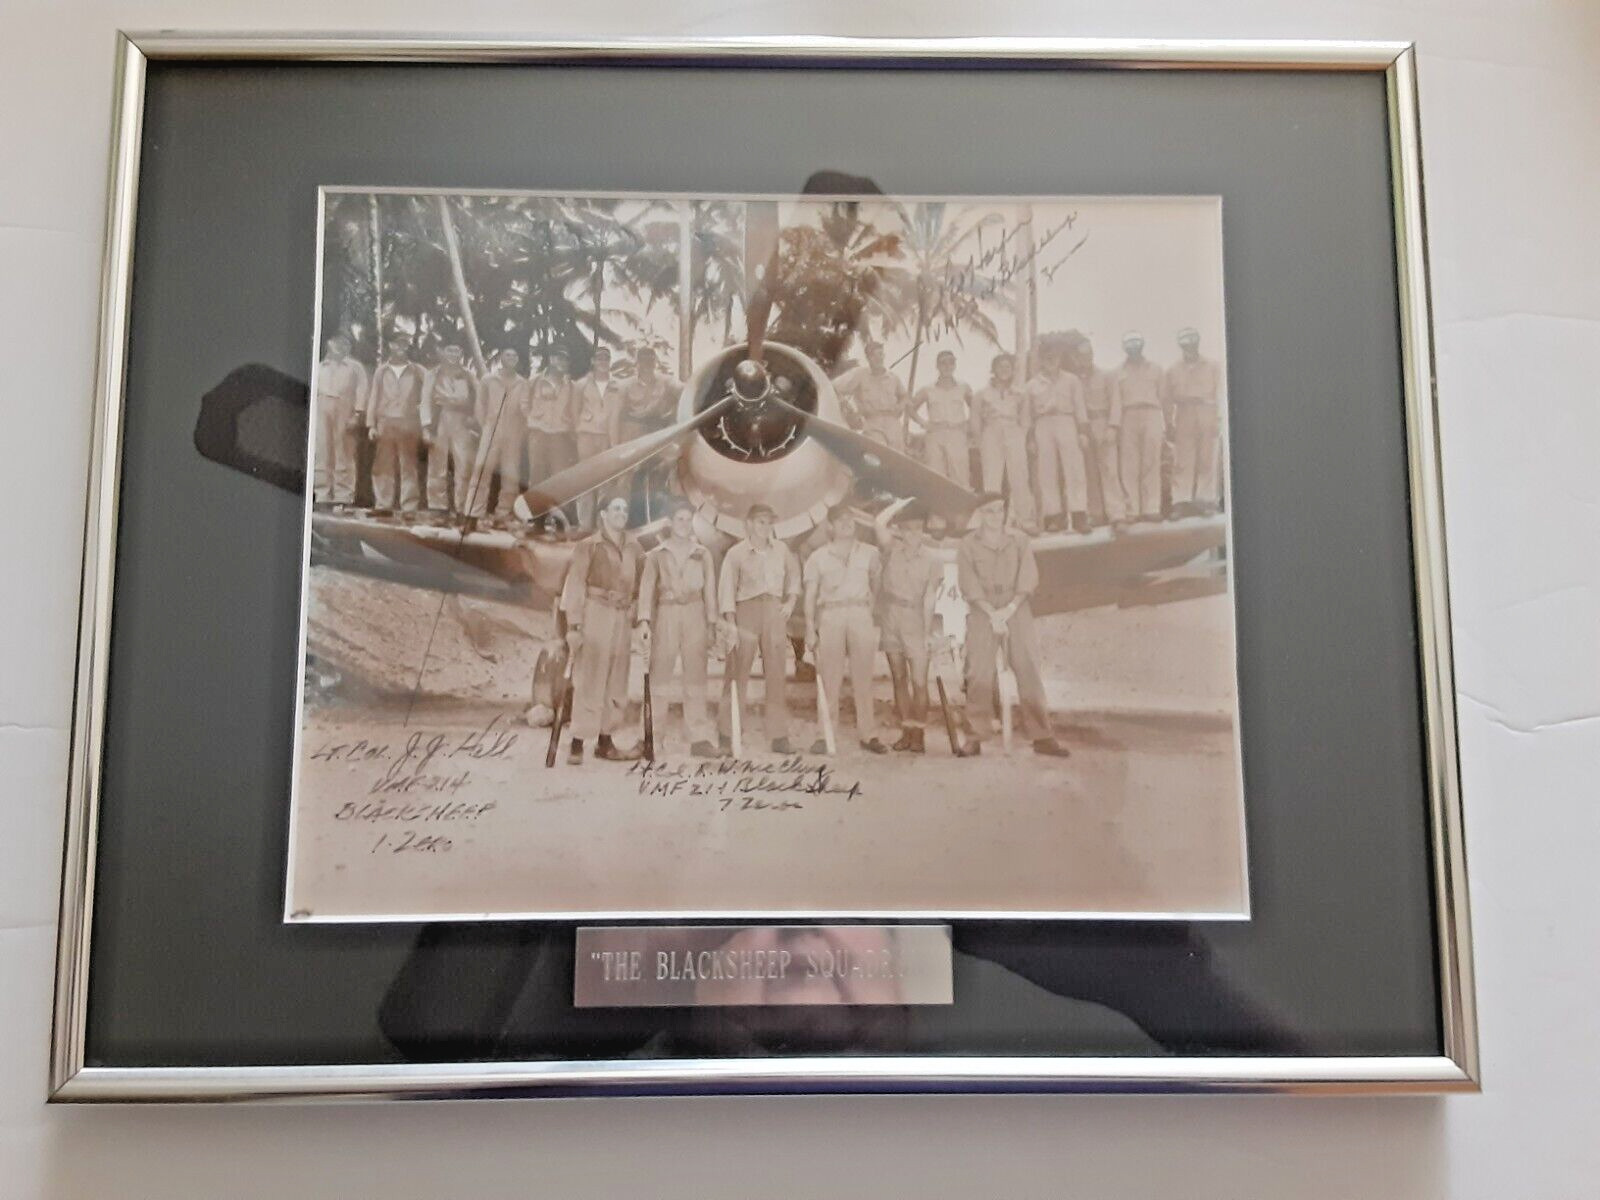 Blacksheep Squadron Framed 8X10 Photo Reprint. 11 in X 14 in. Military Aviation.